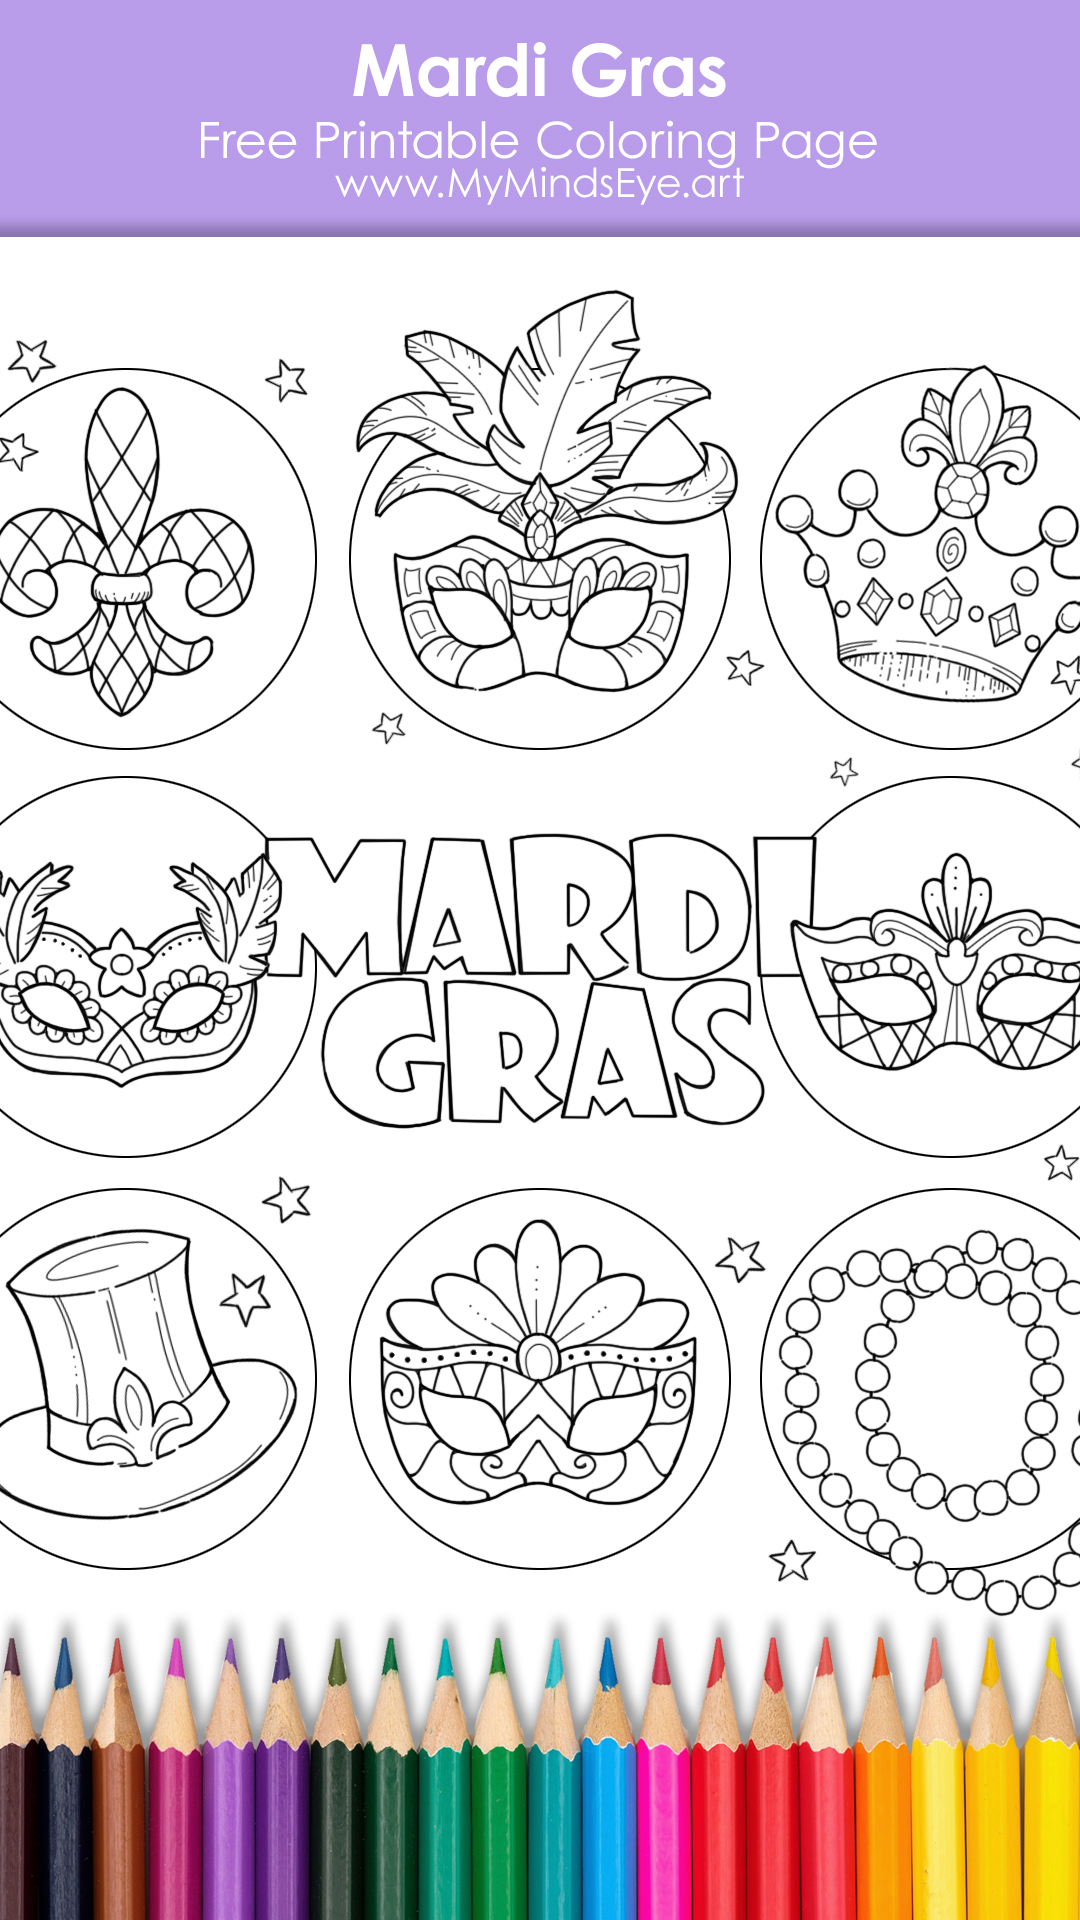 Mardi Gras masks coloring page image